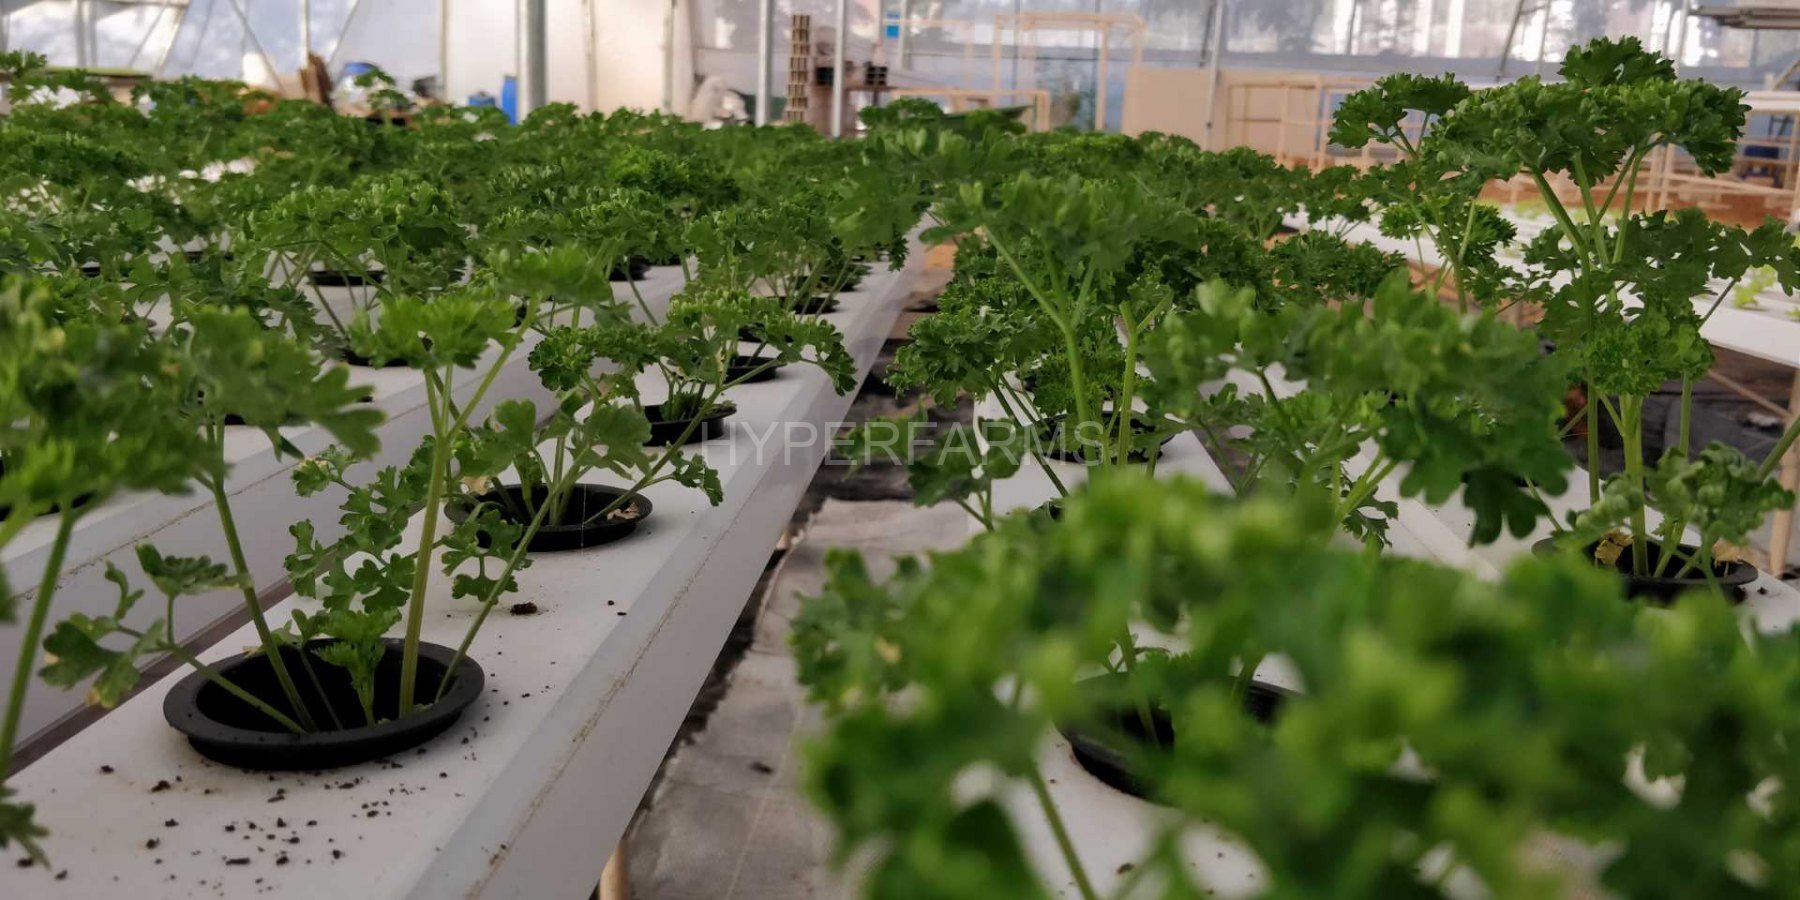 hydroponic-parsley-commercial-hydroponics-farming-india-hyperfarms-4-Large